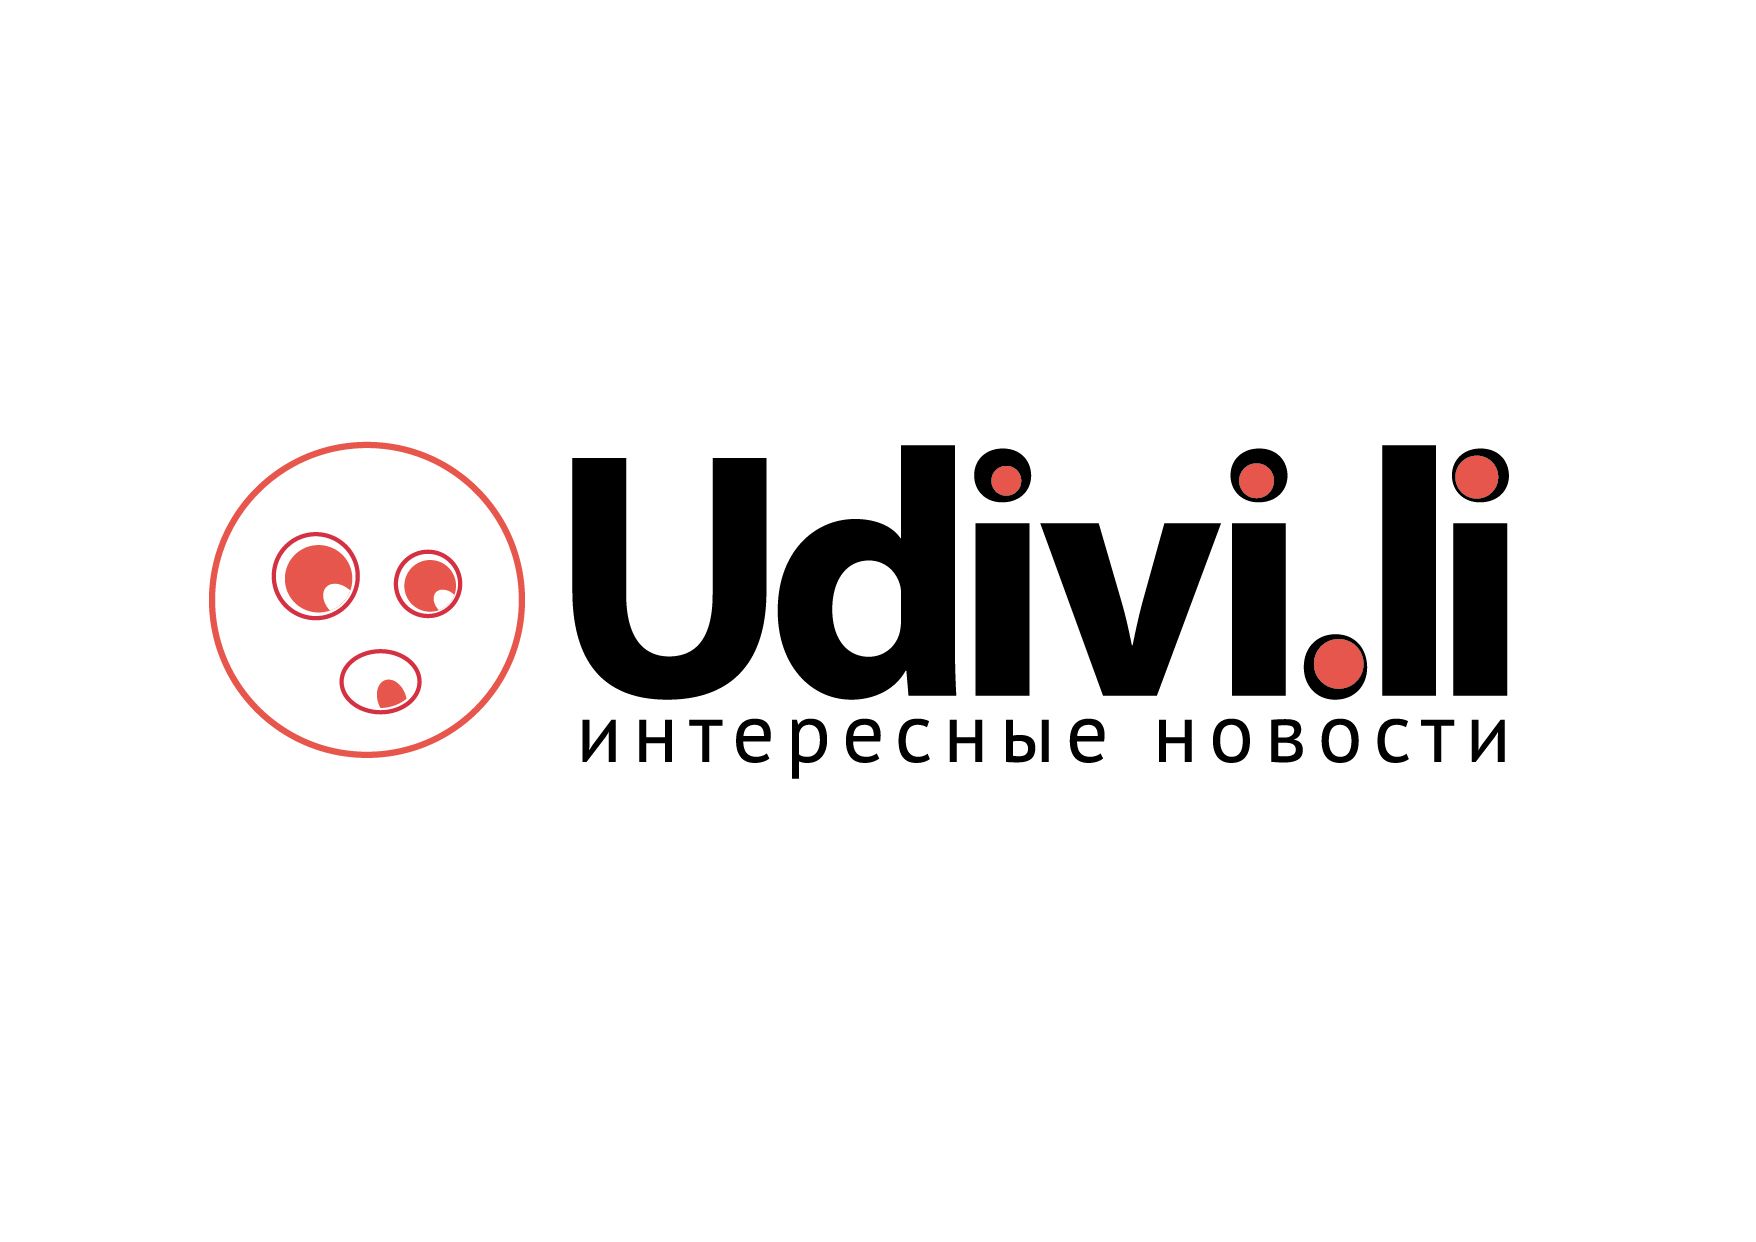 Логотип для Удивили! (Удиви!ли, Udivi.Li) - дизайнер anna_rn